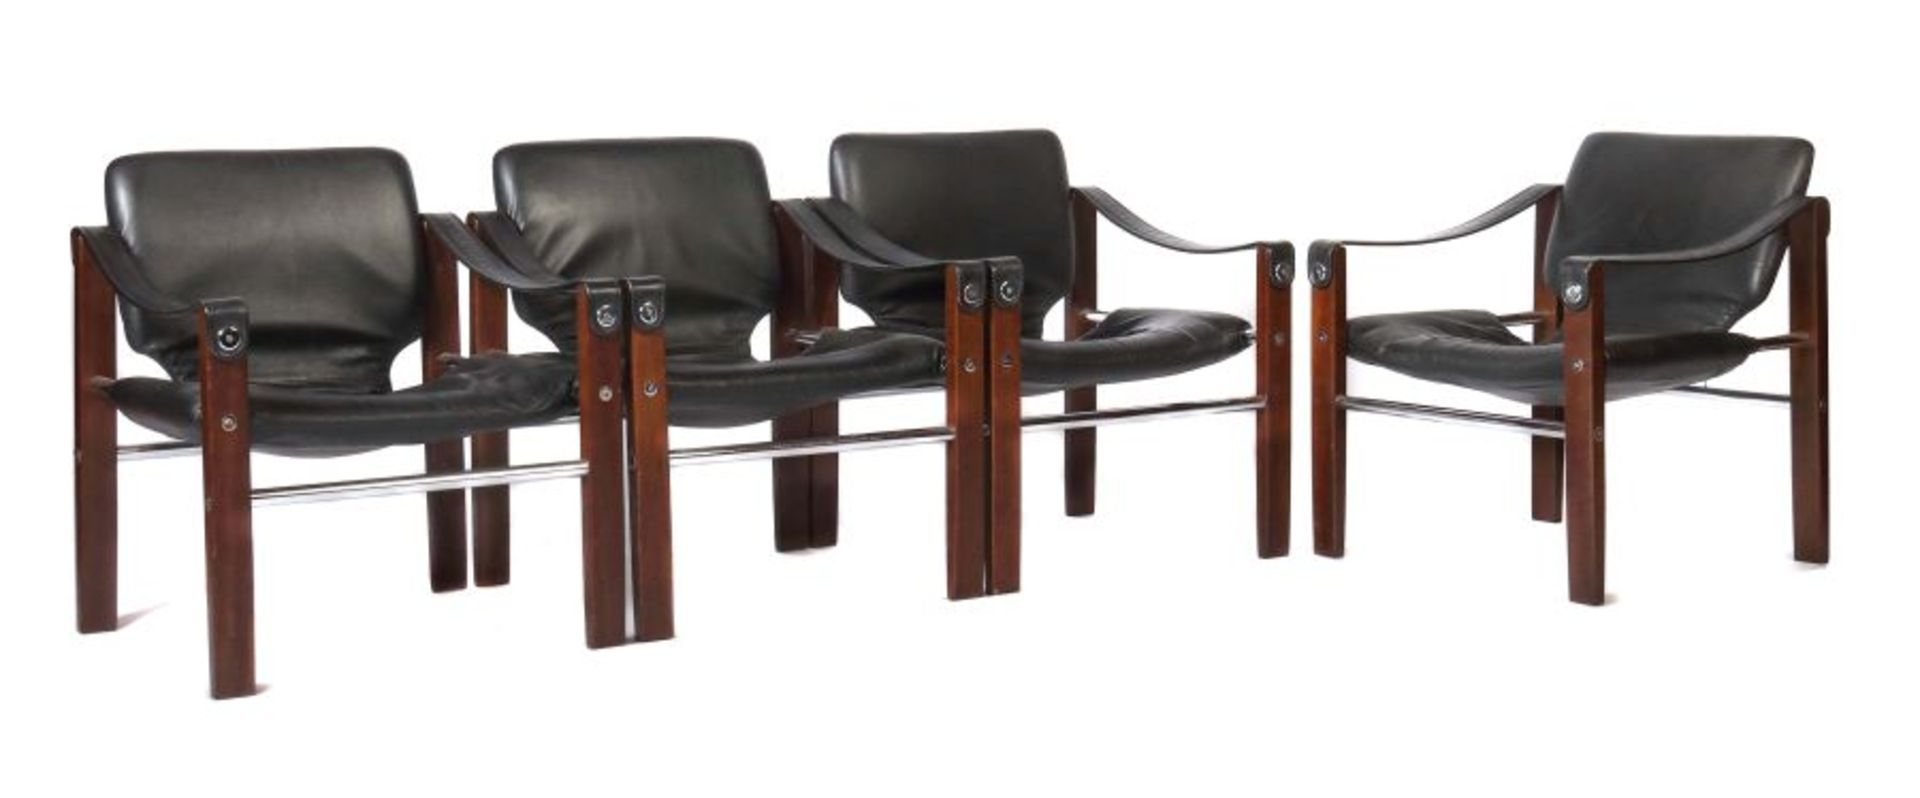 Burke, Maurice Amerikanischer Designer, 4x "Chelsea" Safari-Chair, A: Askana, 1979, vier